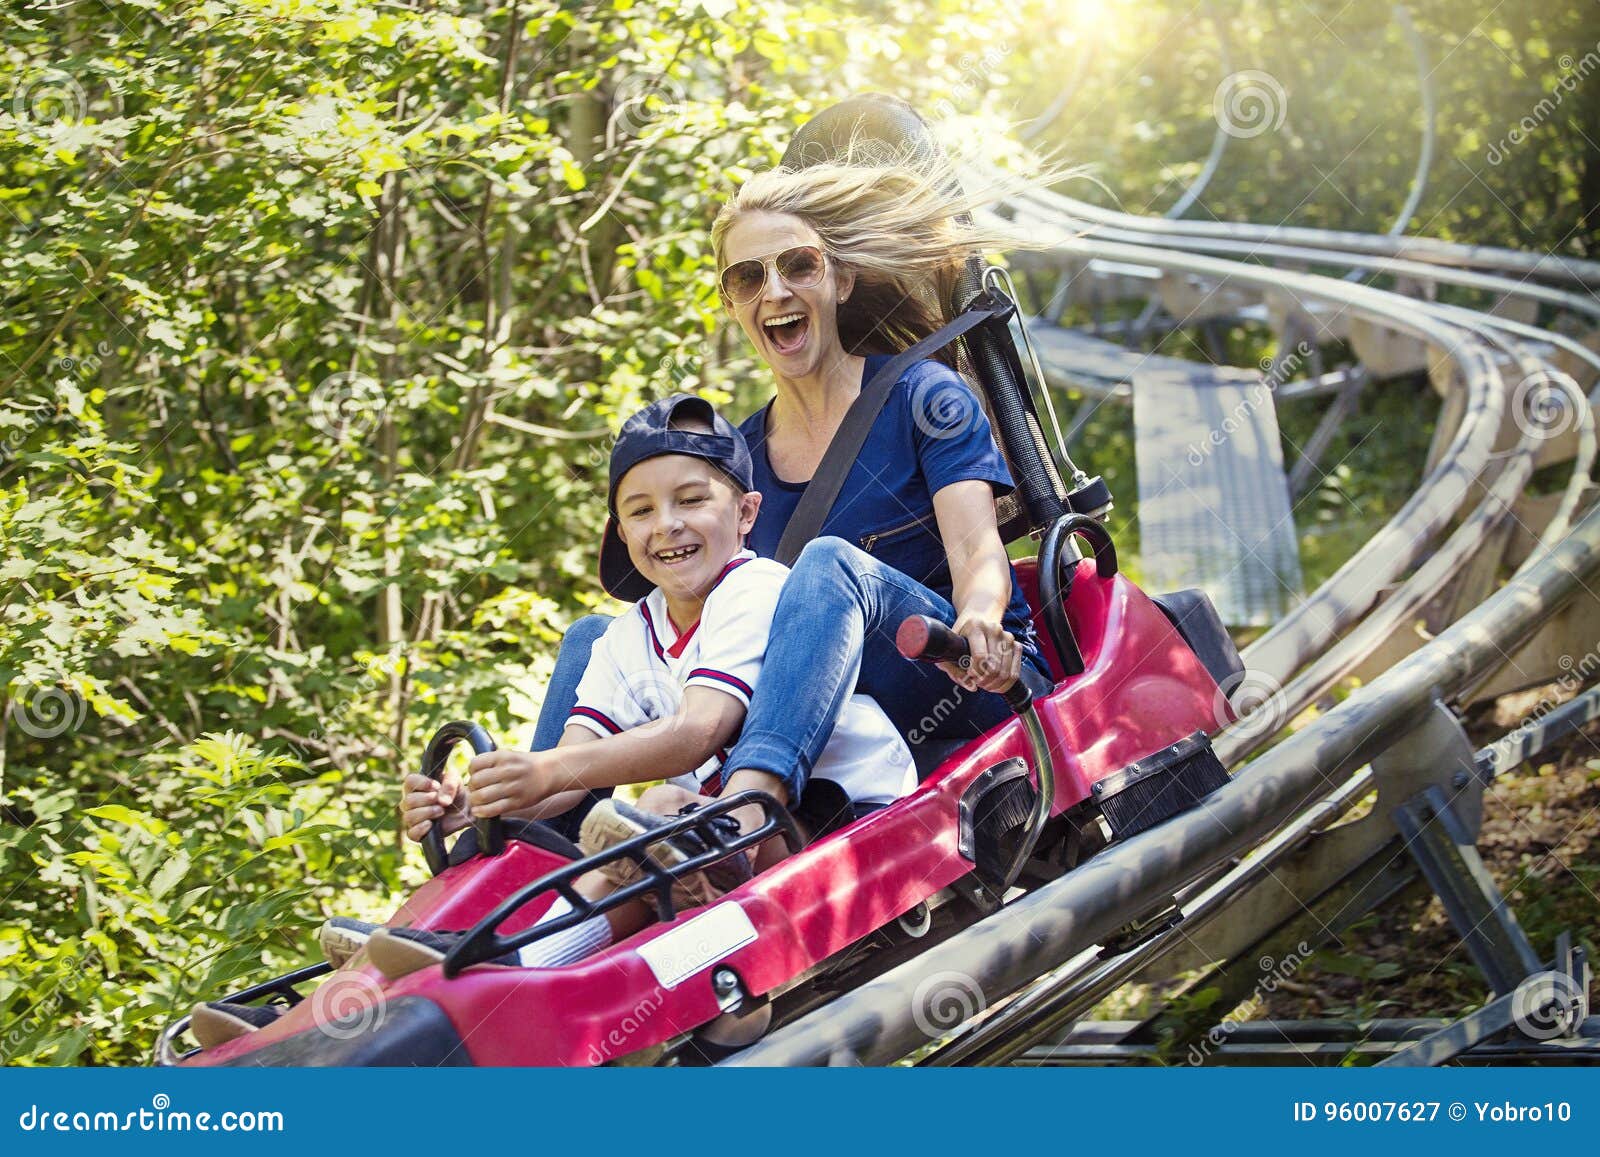 woman and boy enjoying a summer fun roller coaster ride